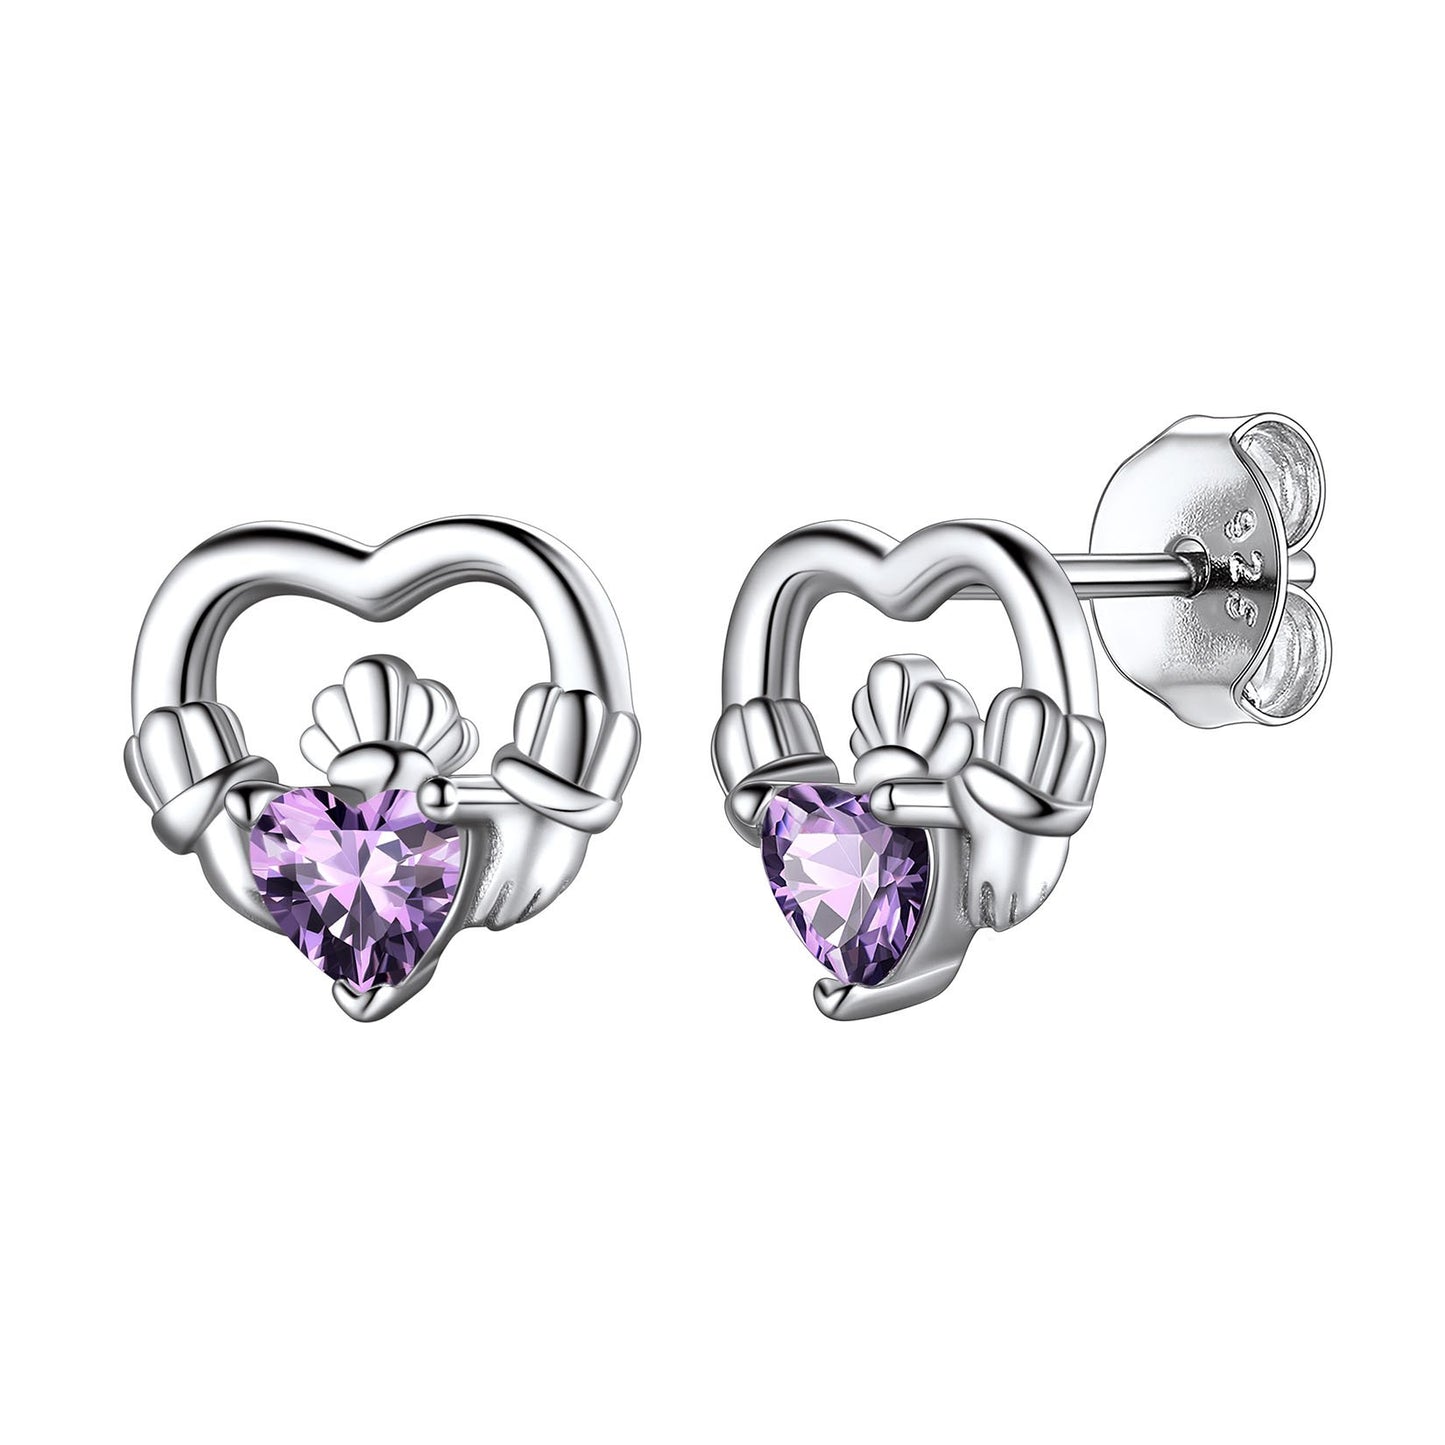 S925 Silver Birthstone Claddagh Stud Earrings for Women BIRTHSTONES JEWELRY